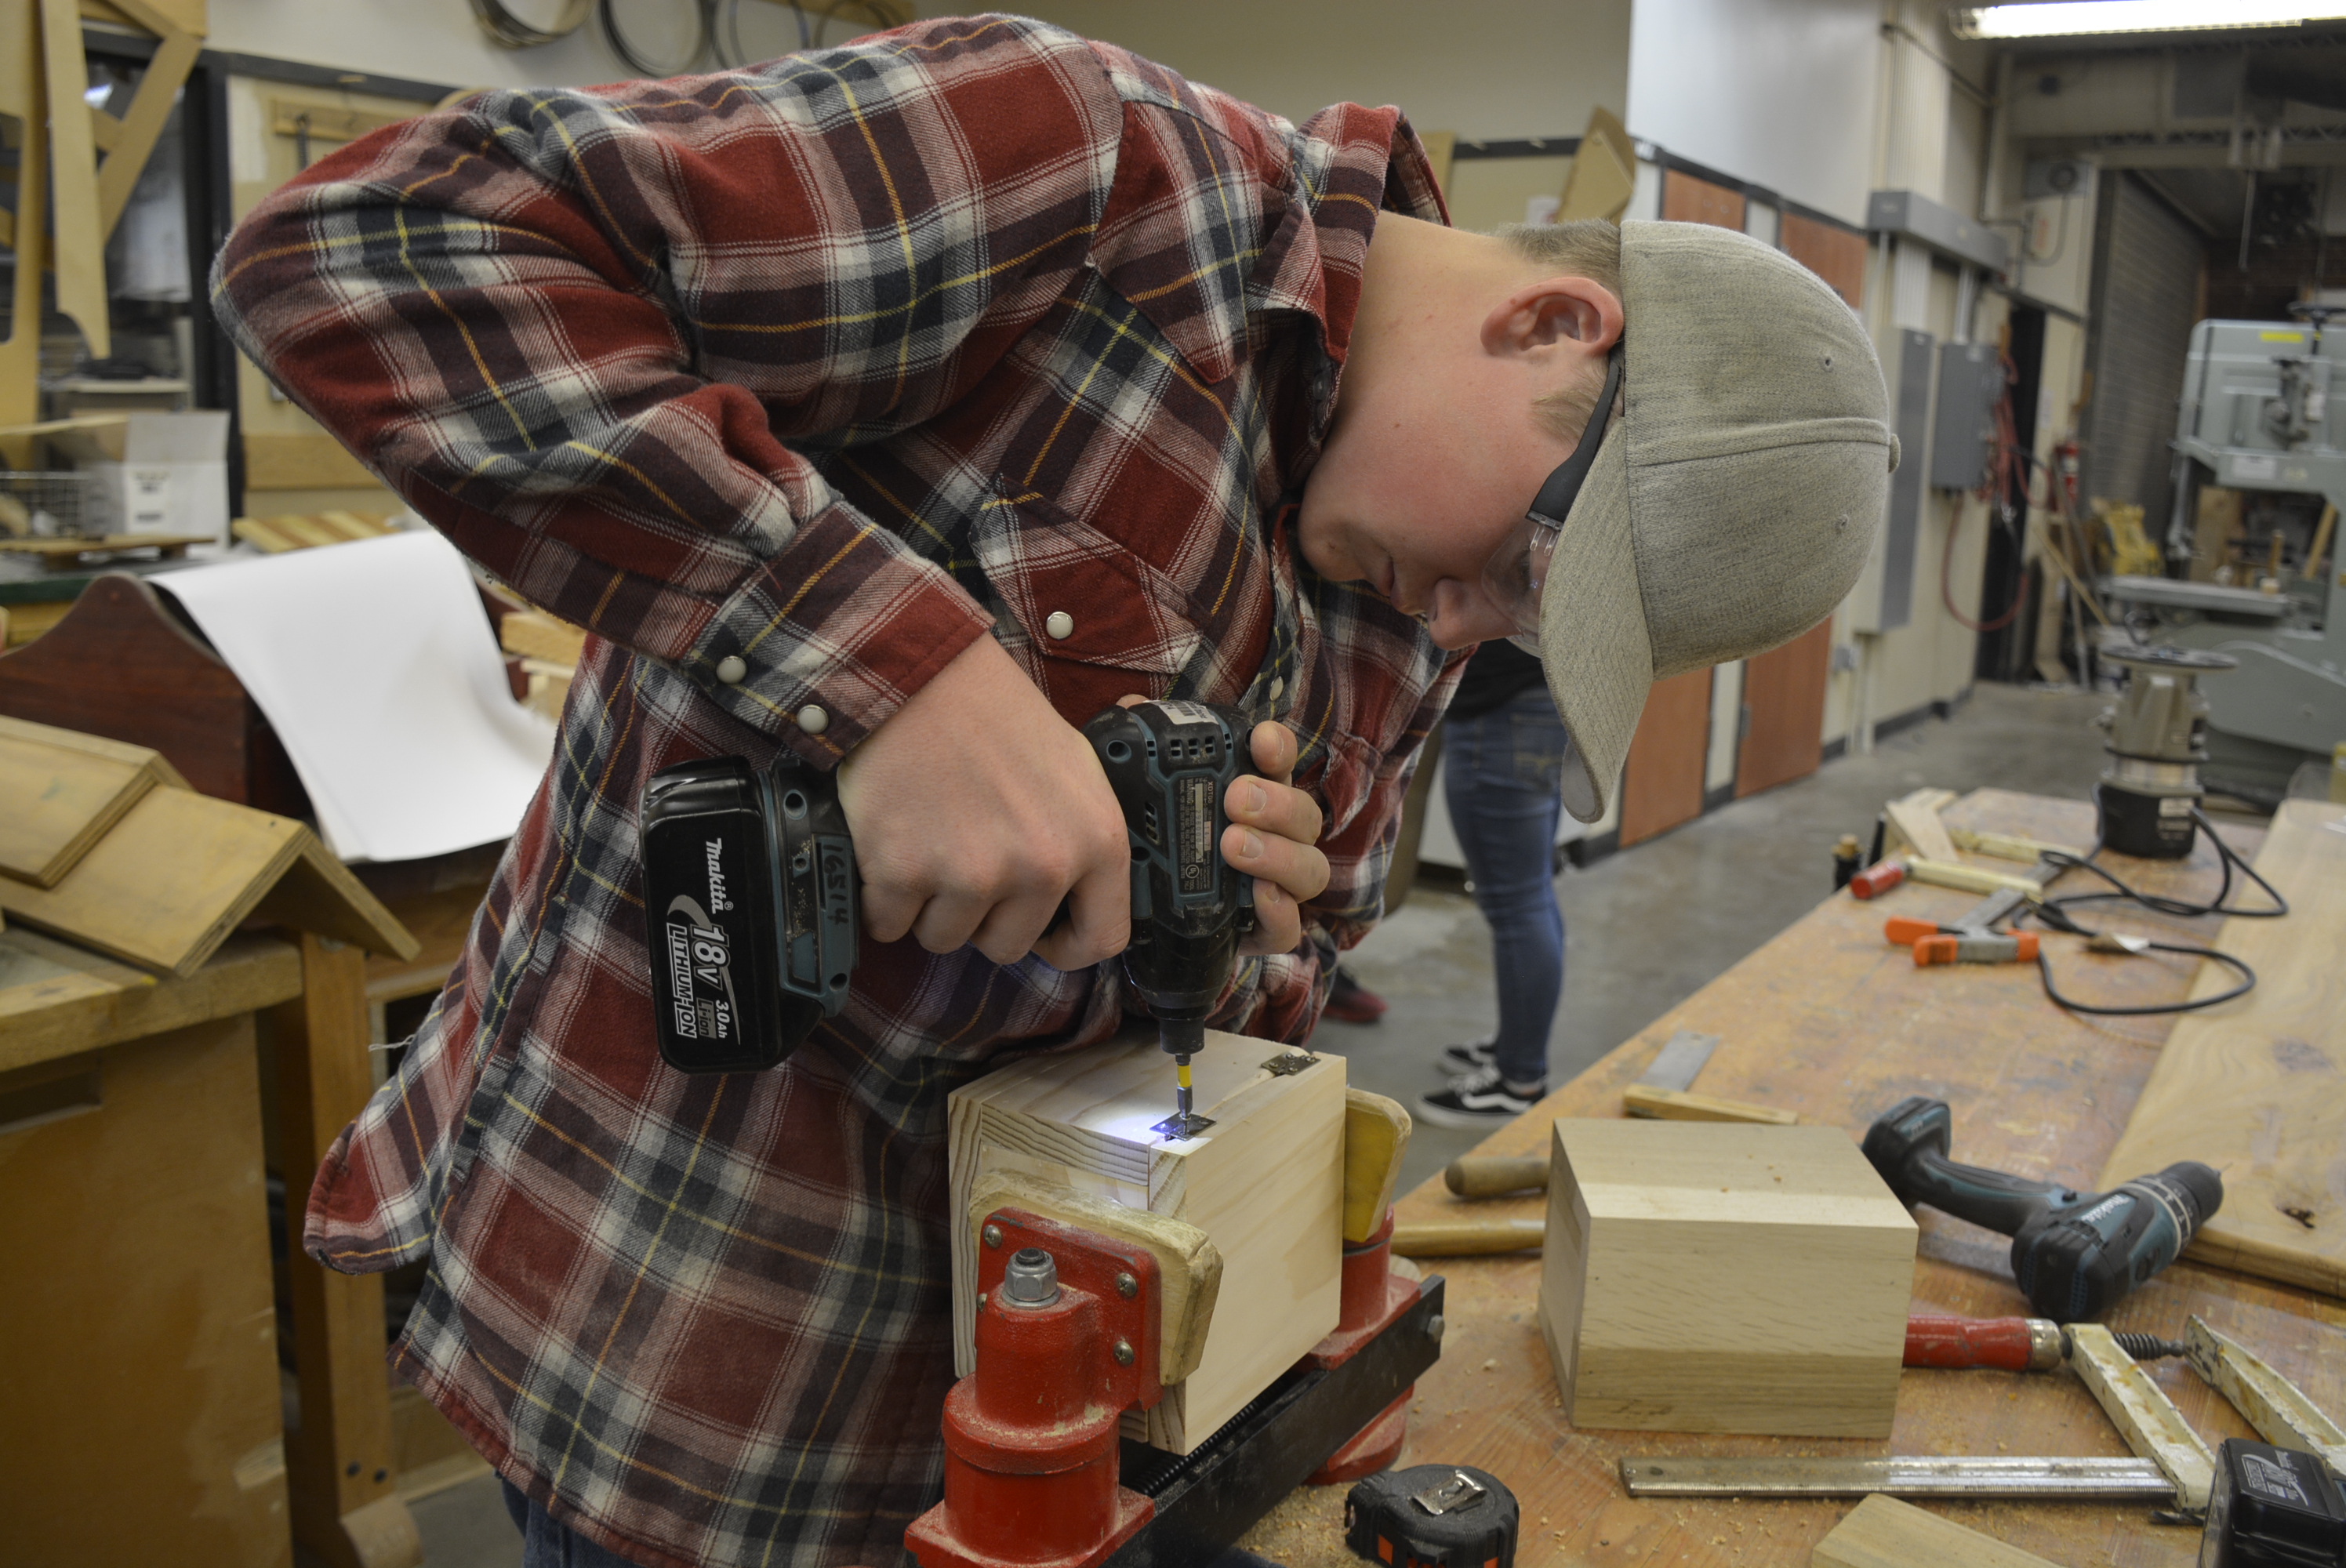 Student uses nail gun to assemble wooden box